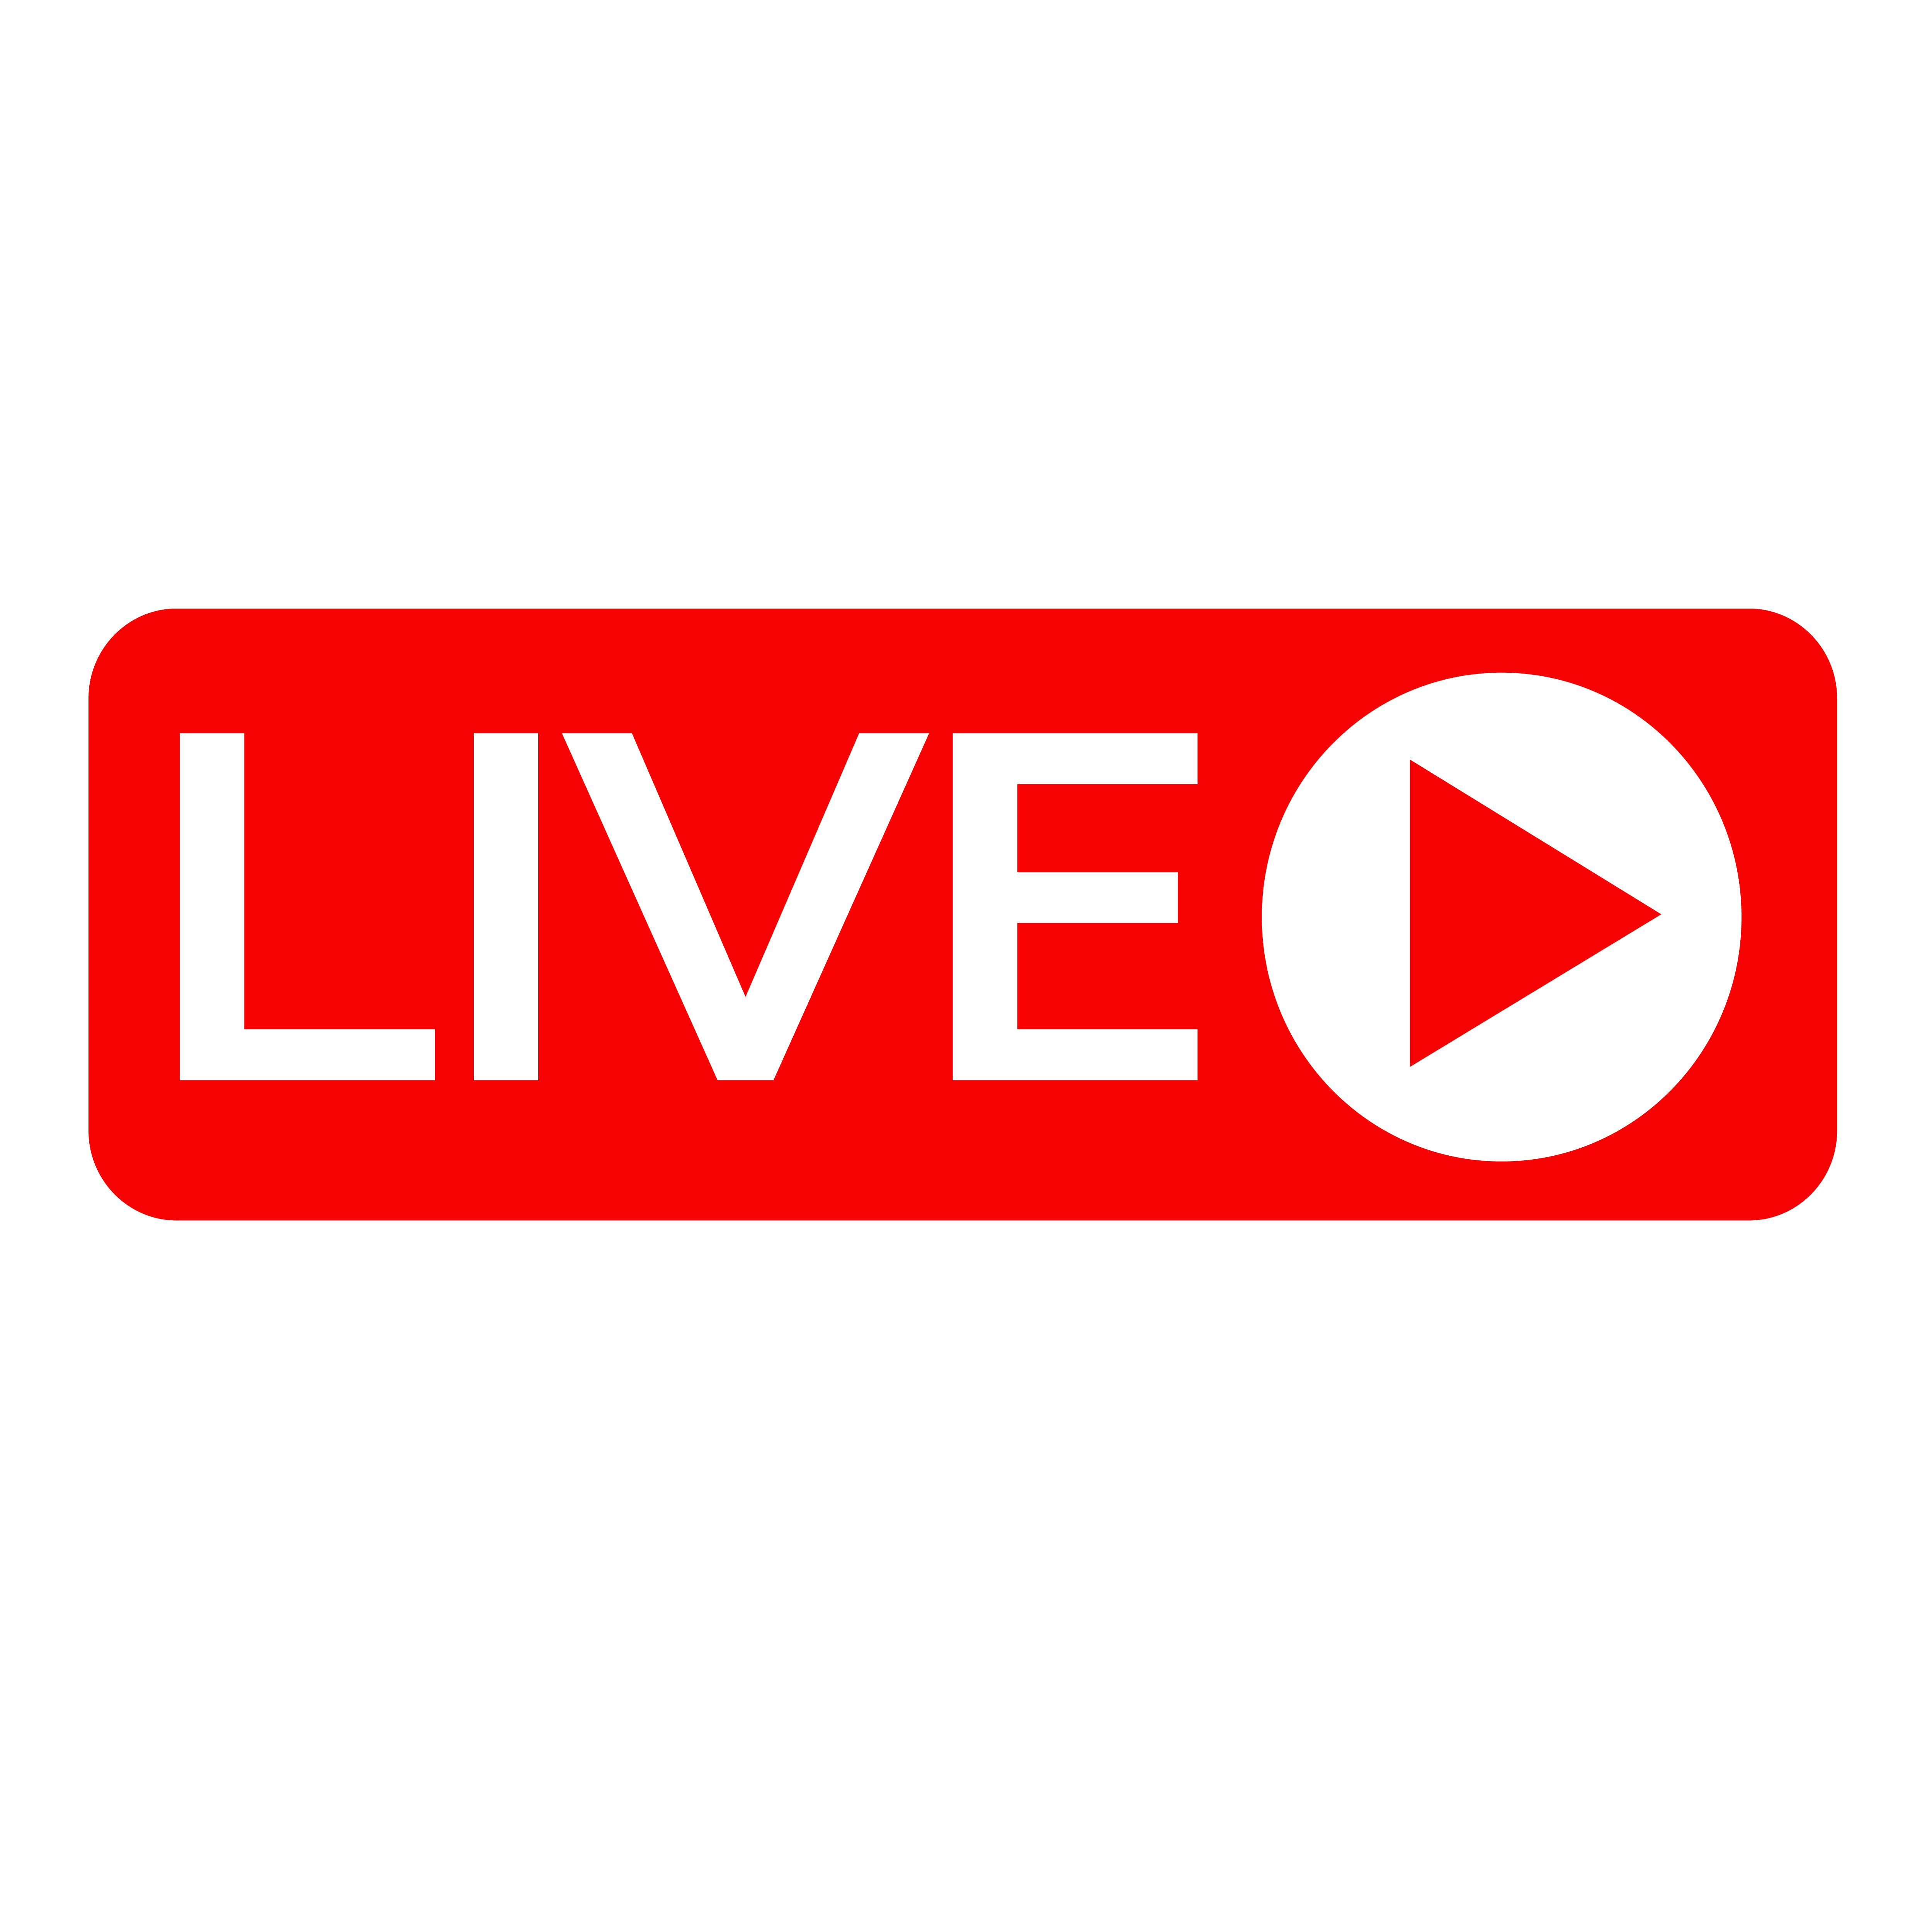 live tv - Ecosia - Images